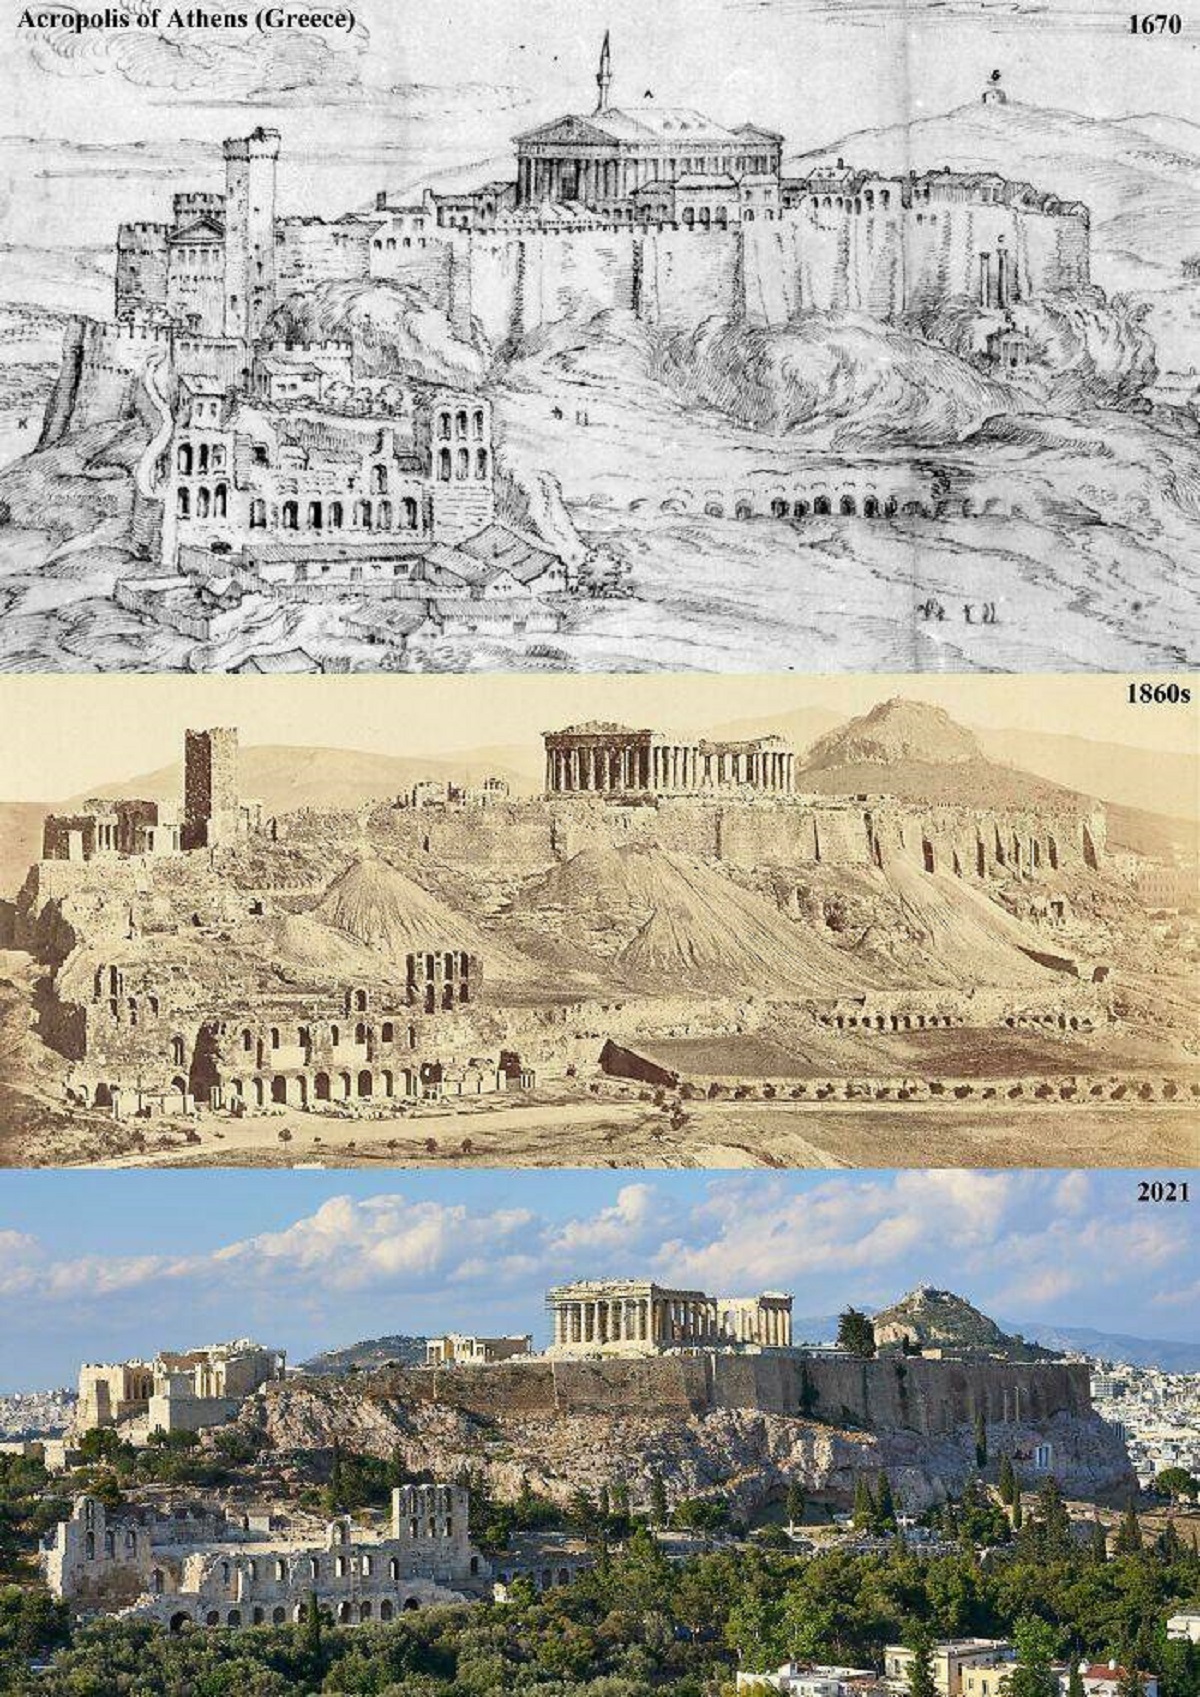 "Acropolis Of Athens (Greece) 1670-1860s-2021"